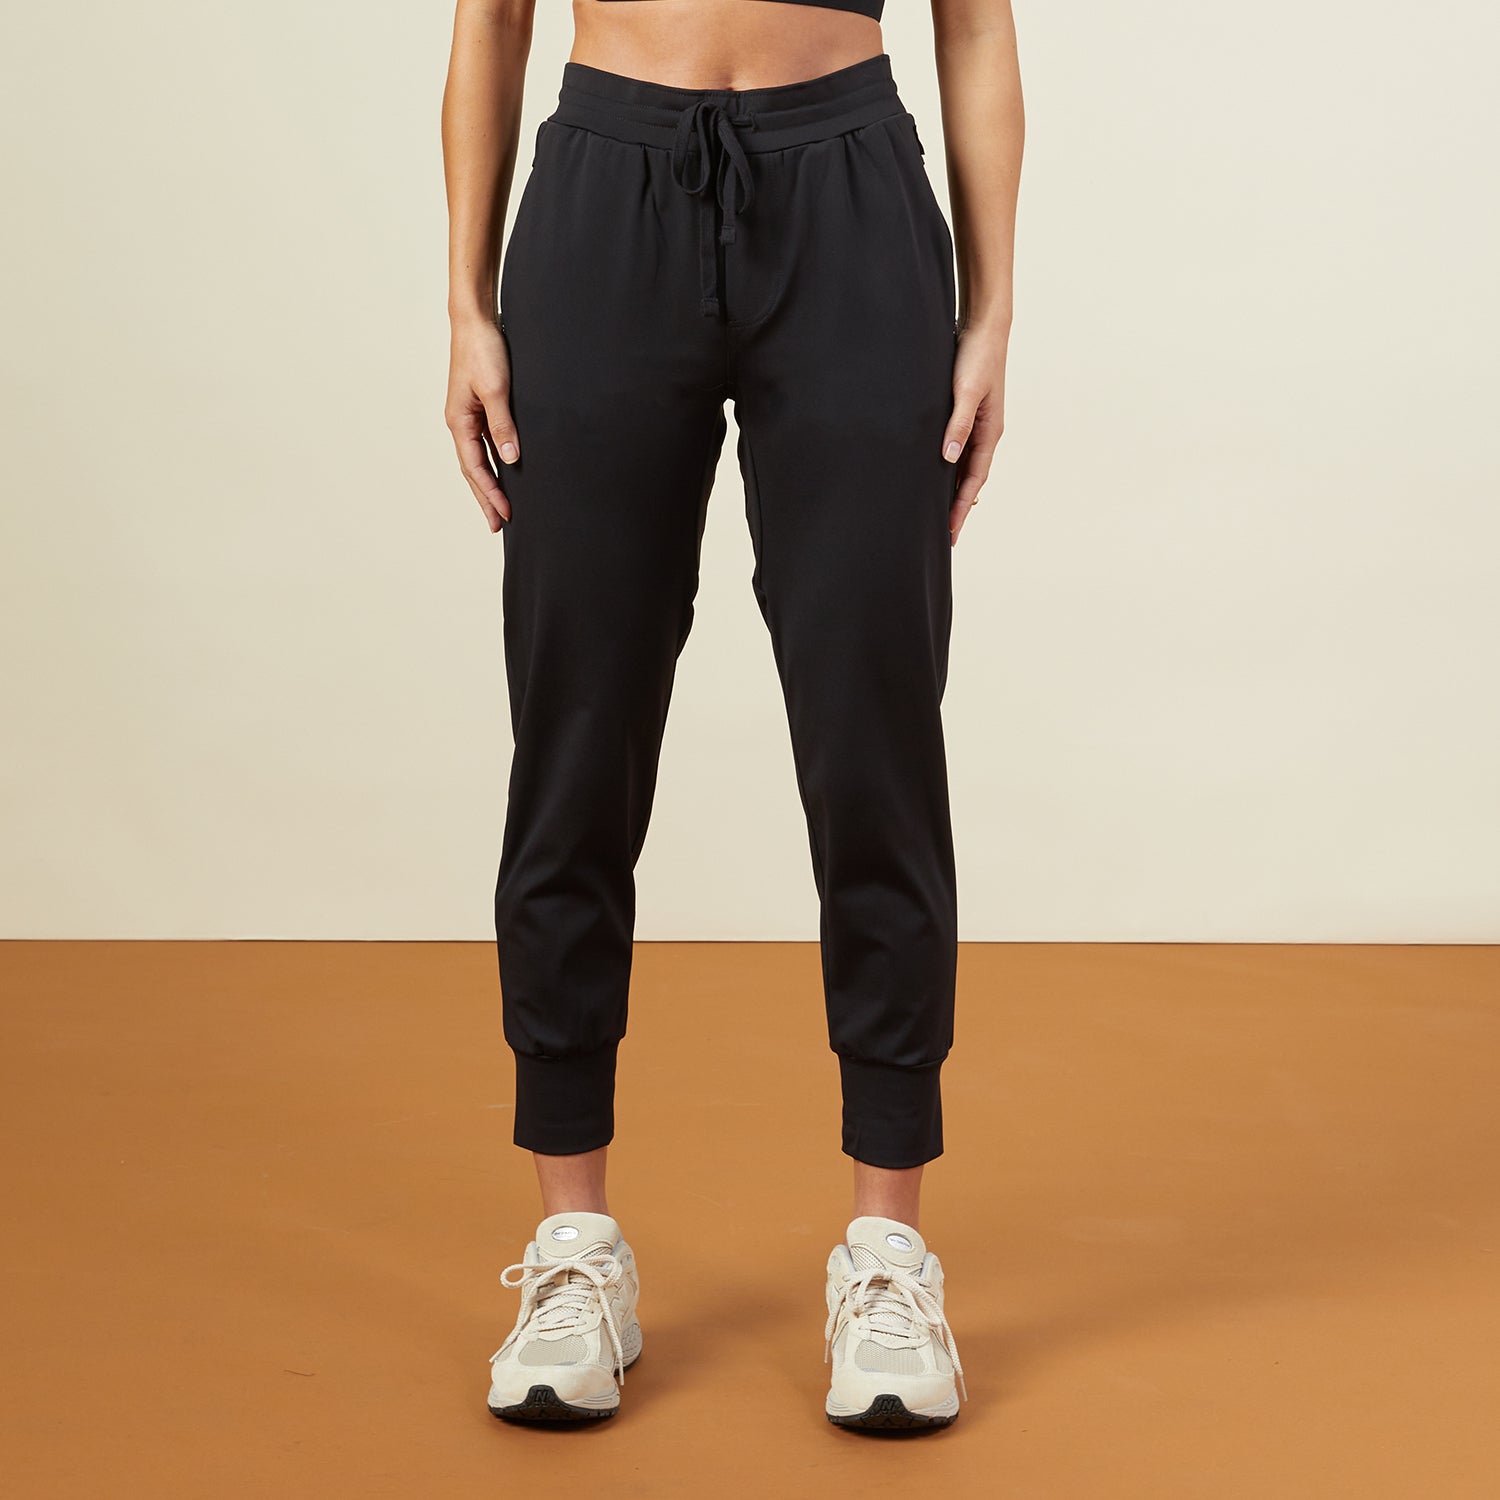 国内代理店版 ghospell / flora demand jogger trousers | www ...